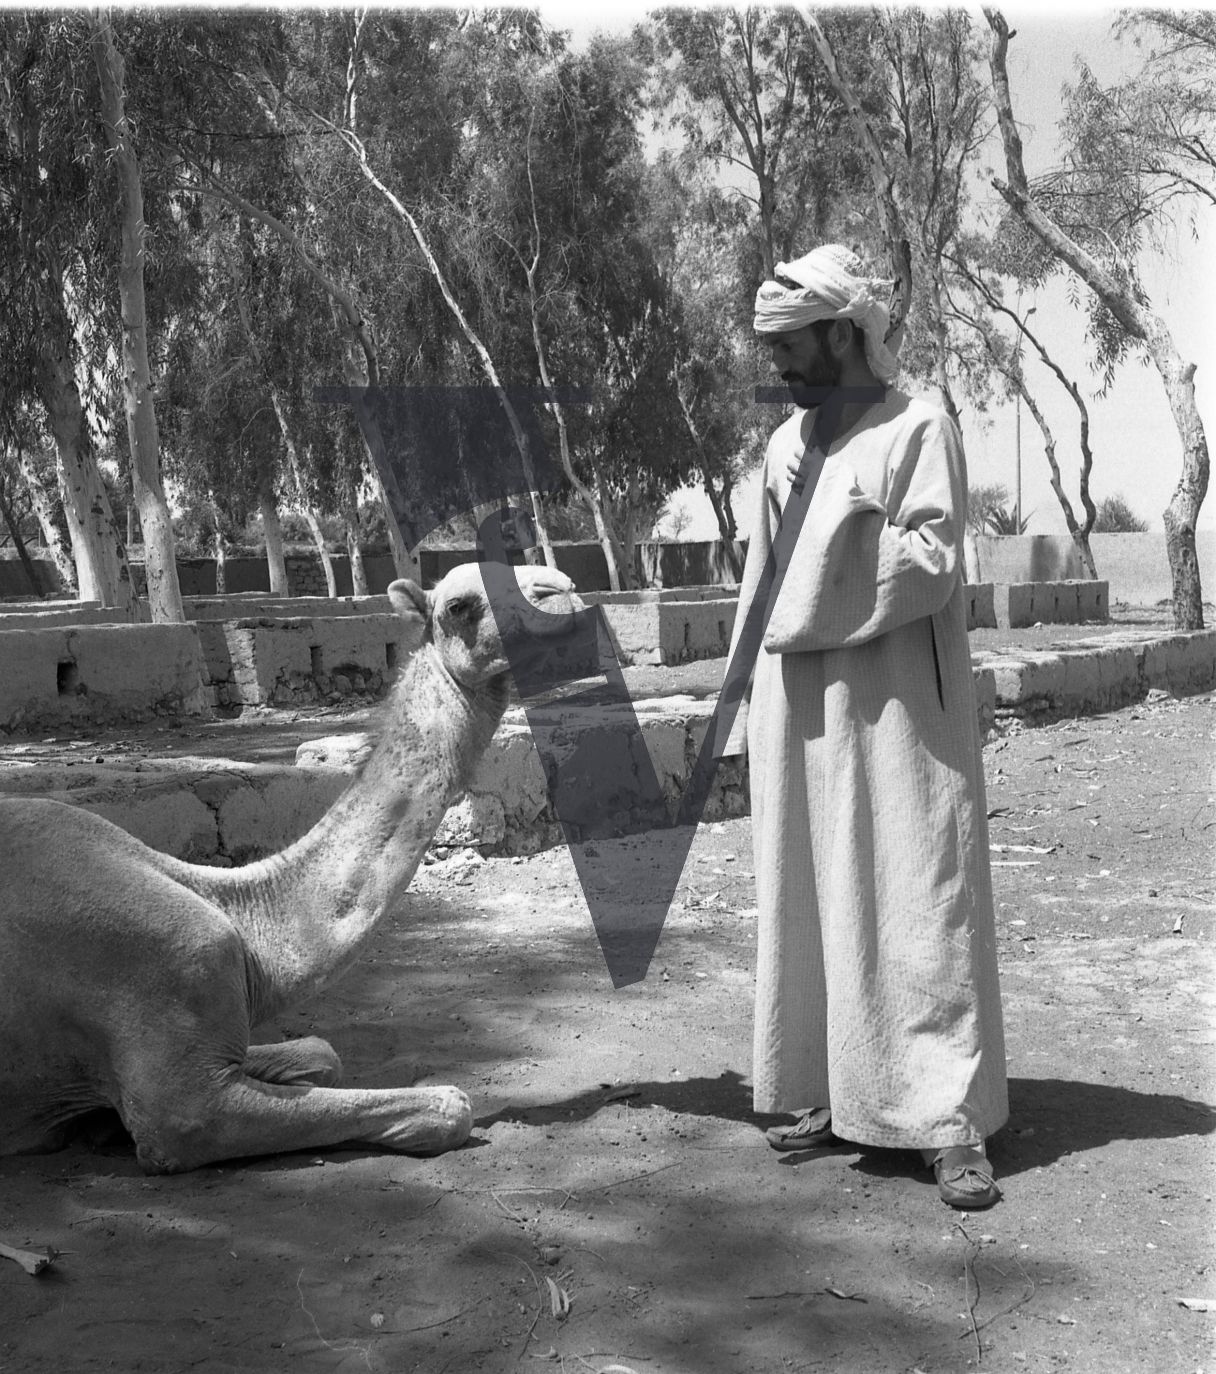 Harrania, Egypt, Peter Davis with Camel.